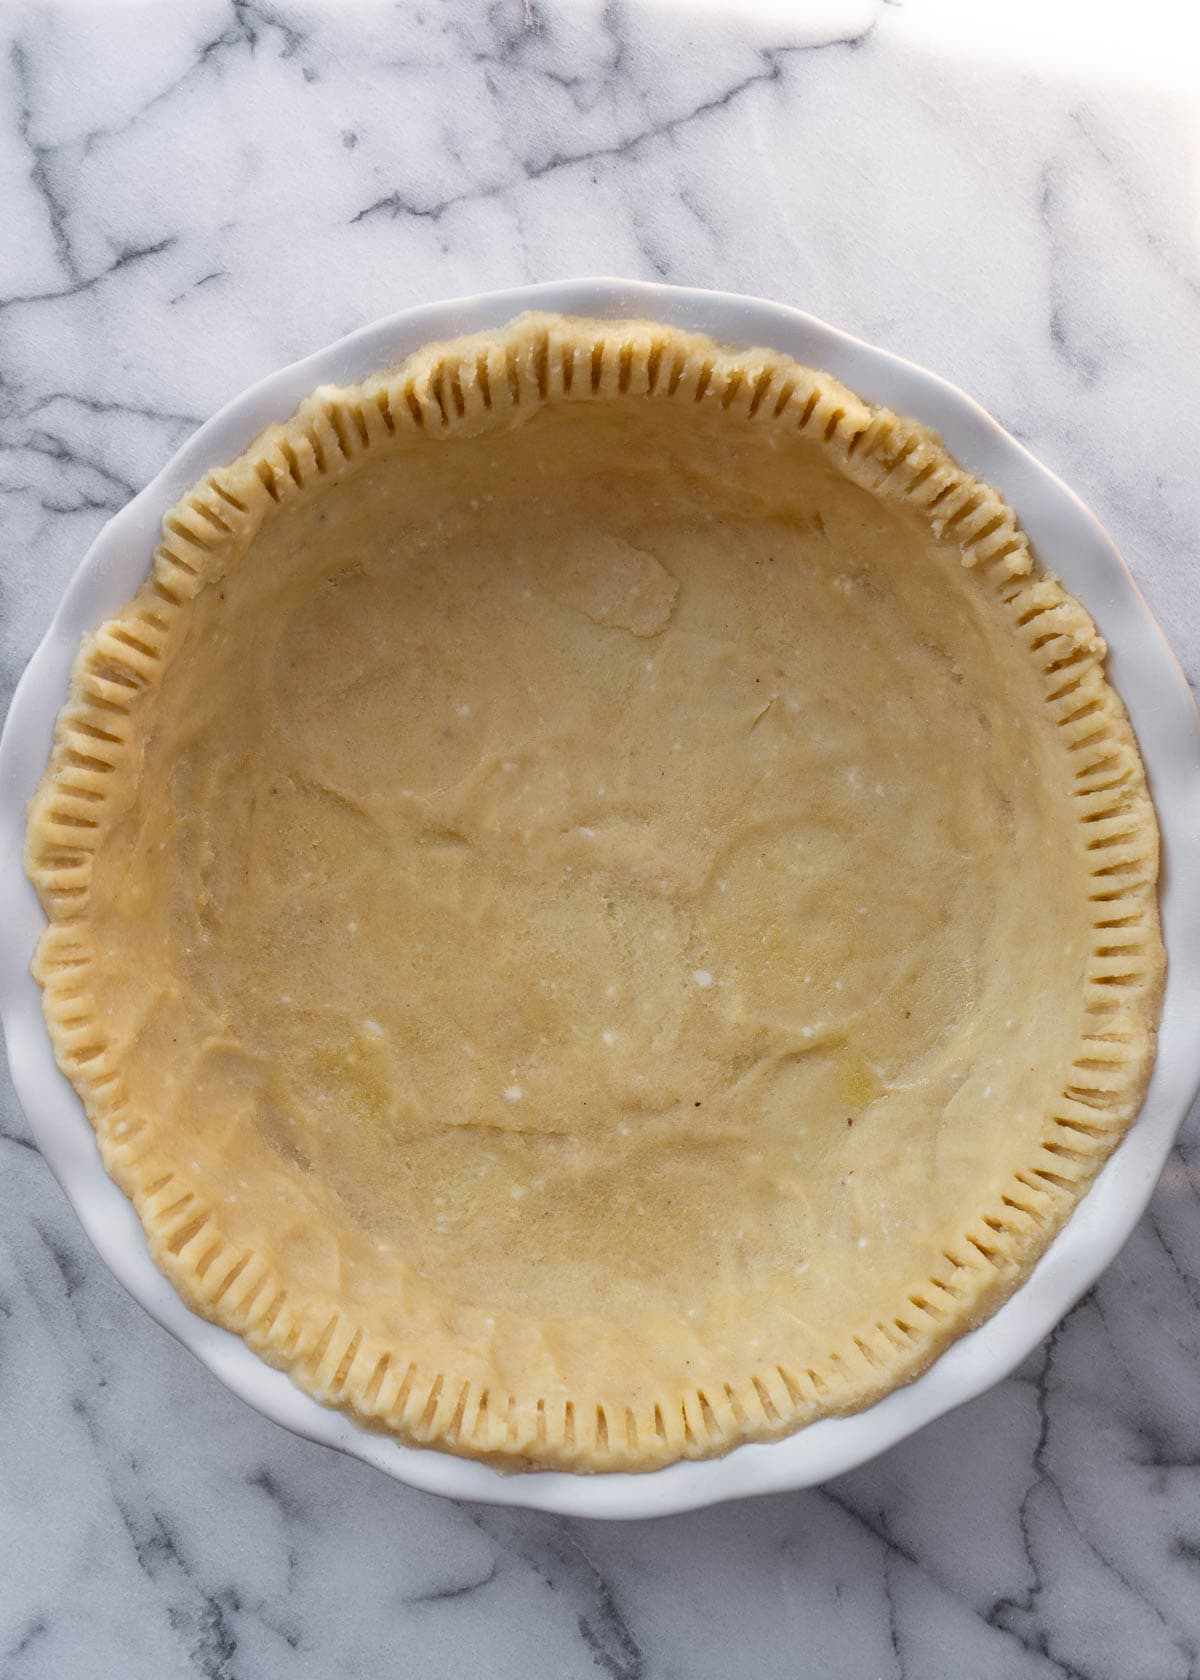 an unbaked pie crust